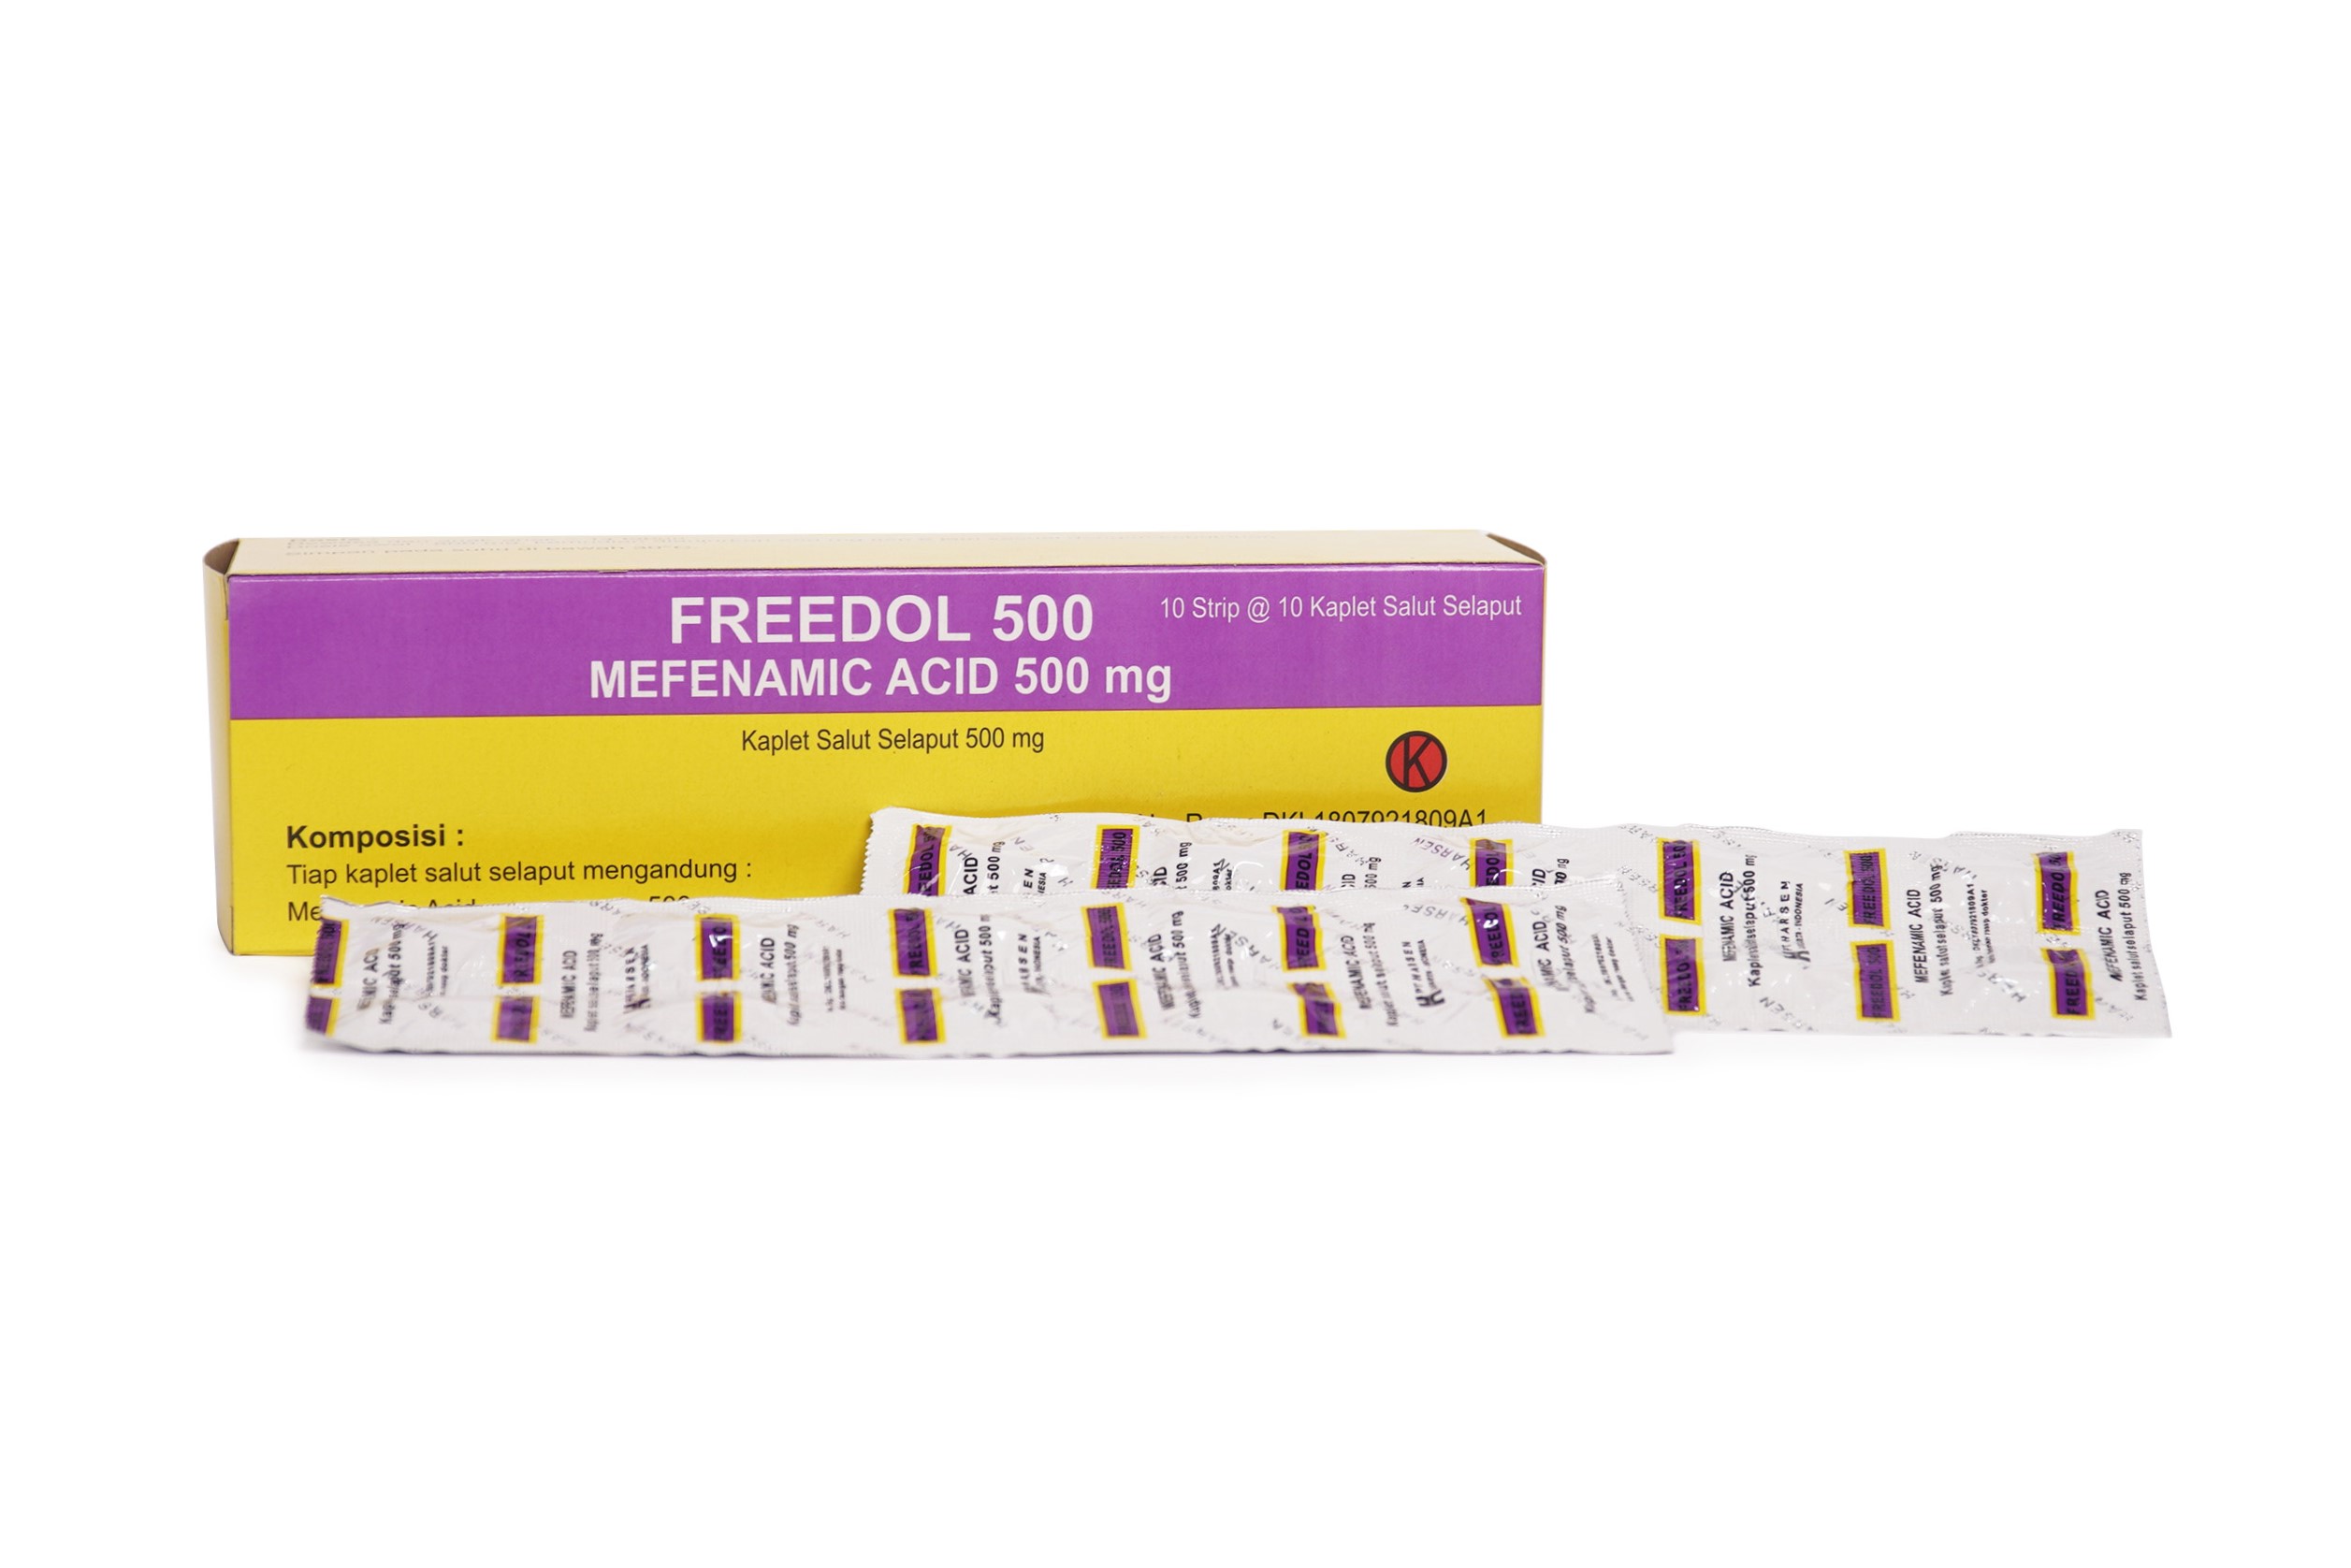 Freedol 500